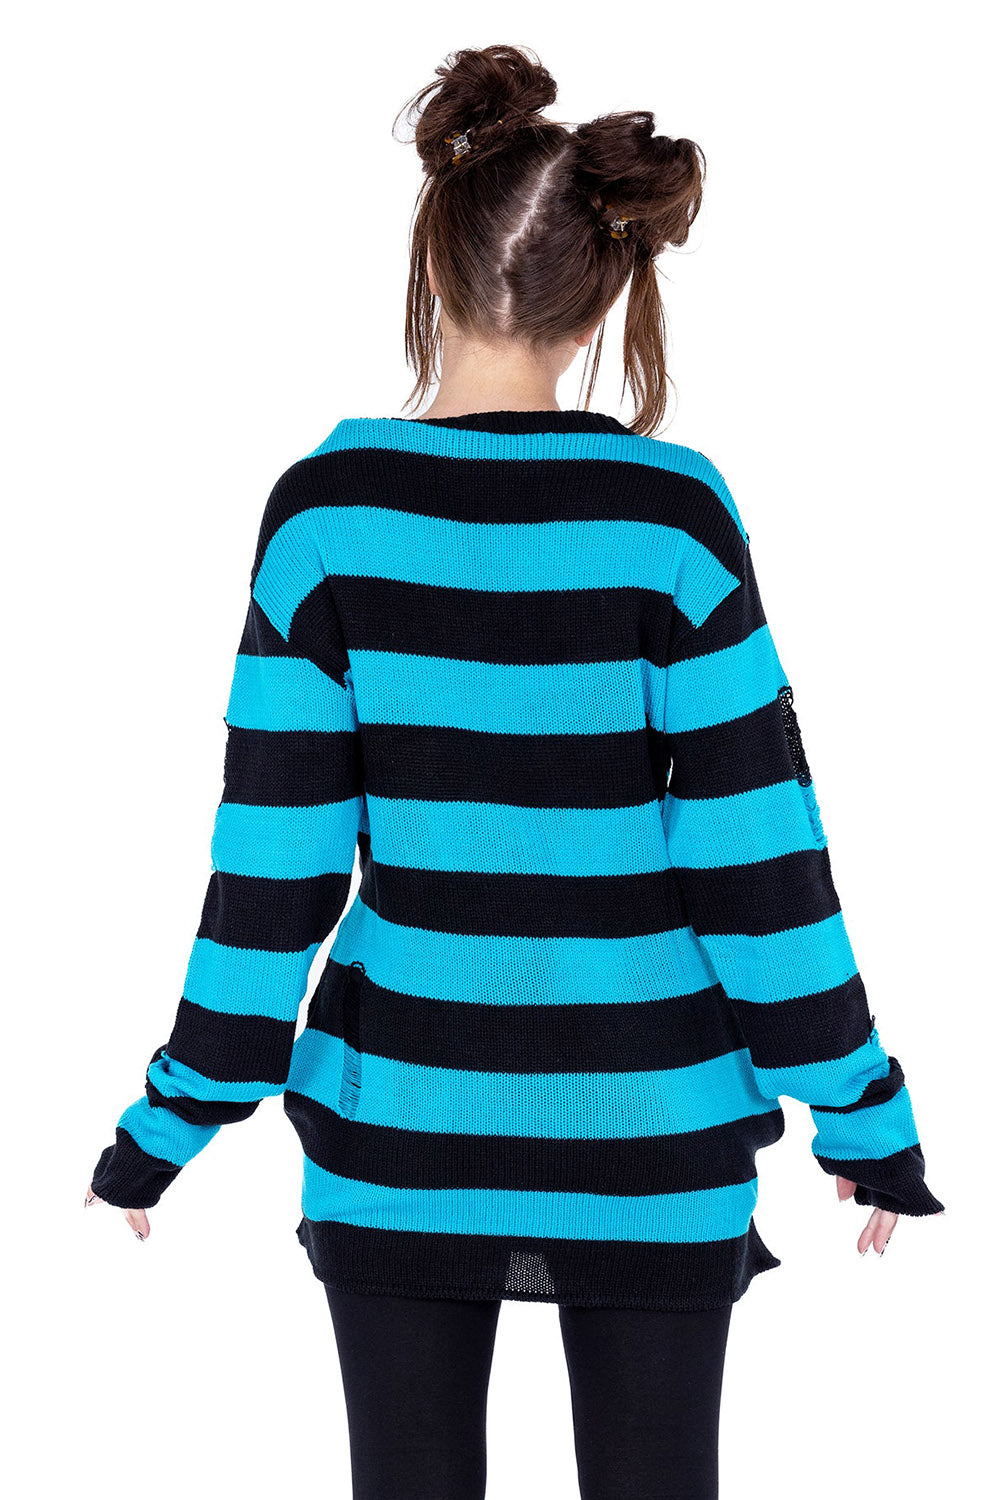 blue and black striped goth sweater